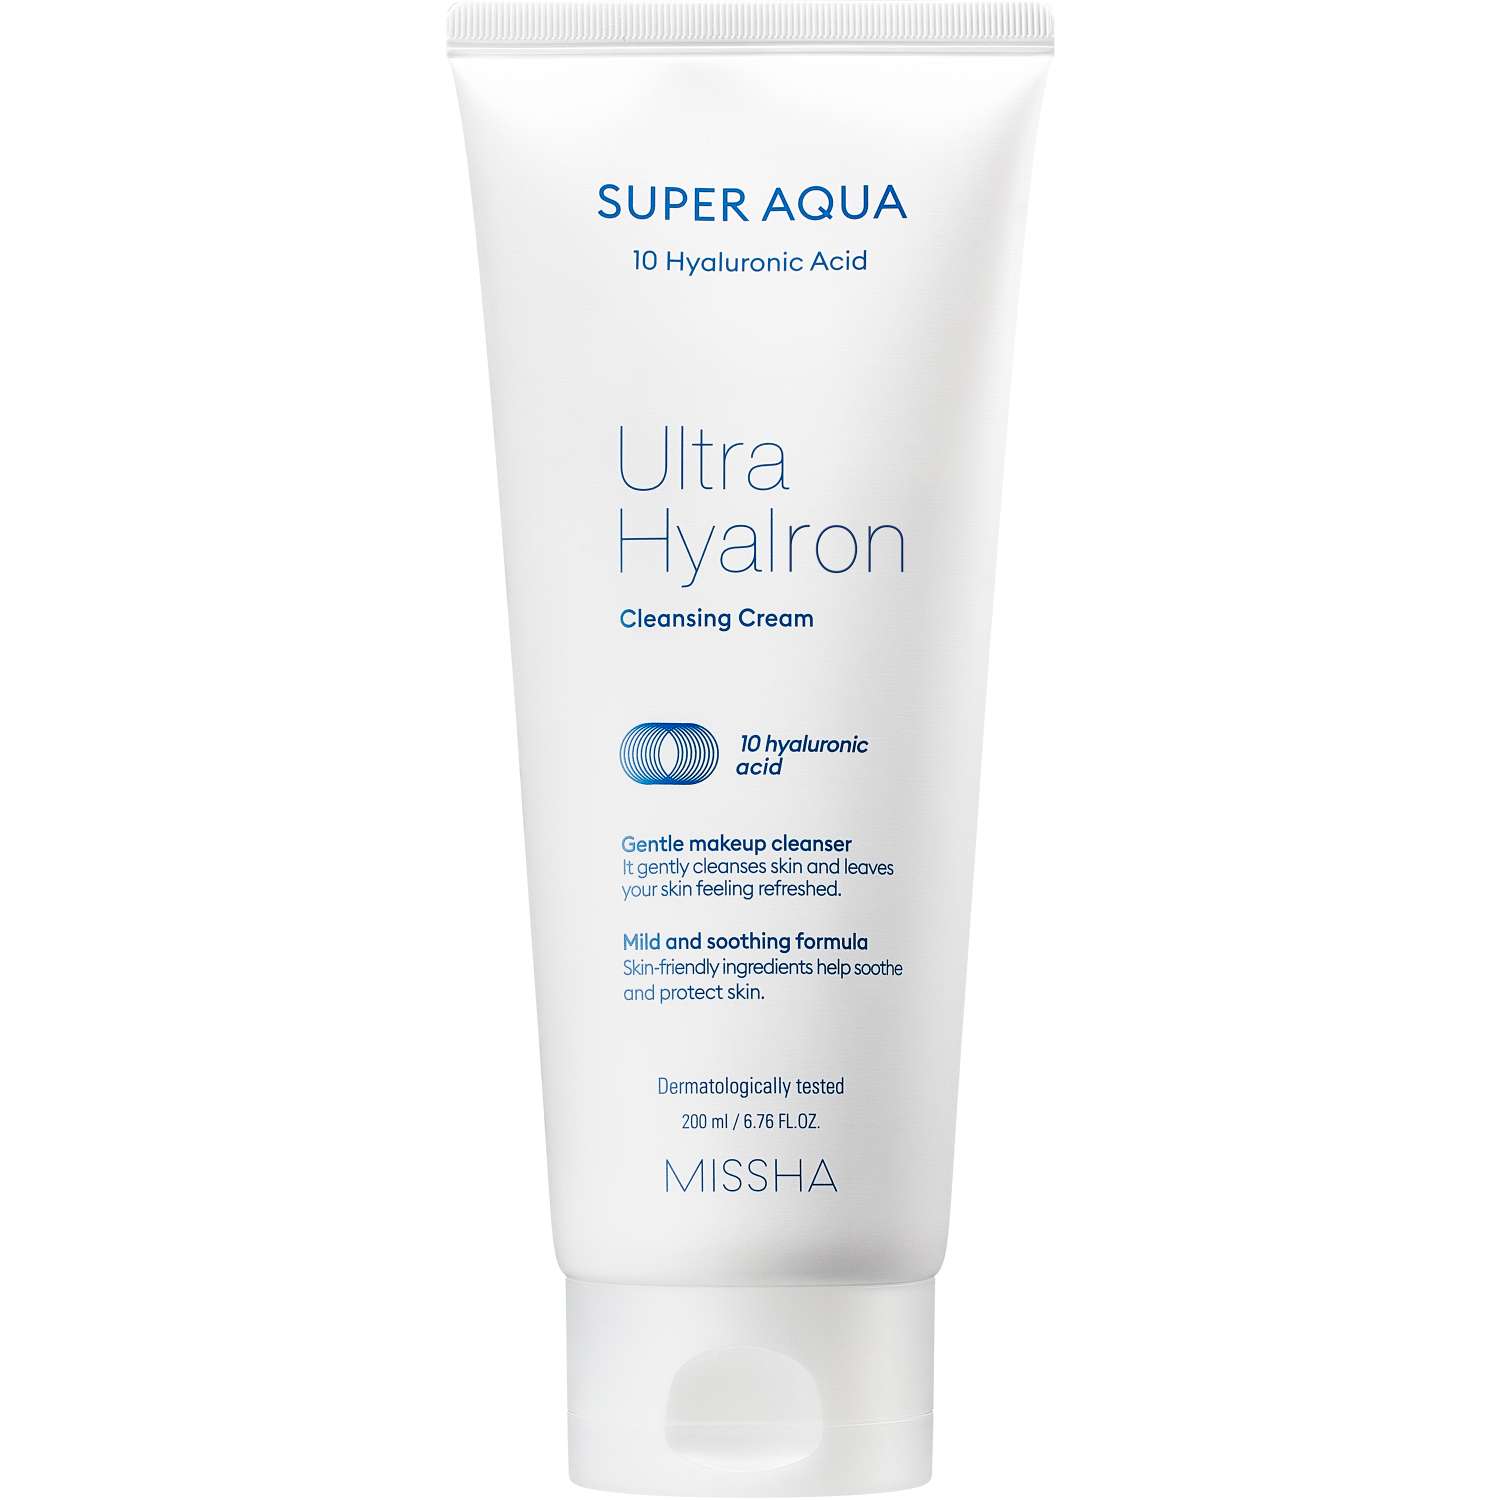 Пенка для умывания MISSHA Super Aqua Ultra Hyalron для умывания и снятия макияжа 200 мл - фото 1